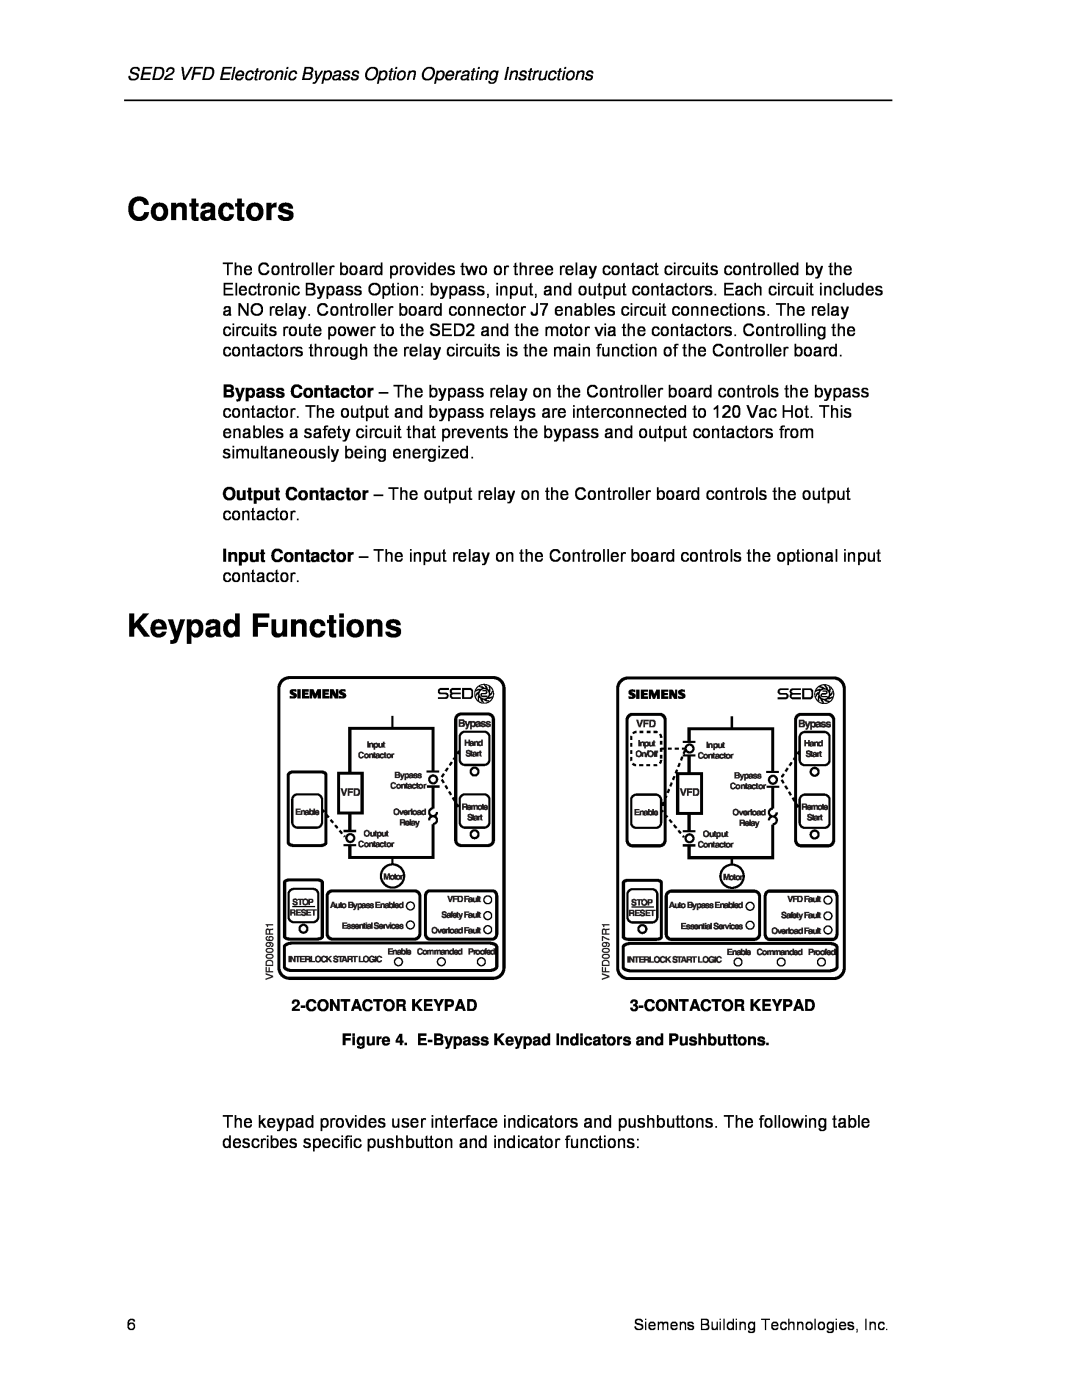 Siemens 125-3208 operating instructions Contactors, Keypad Functions, Contactorkeypad 